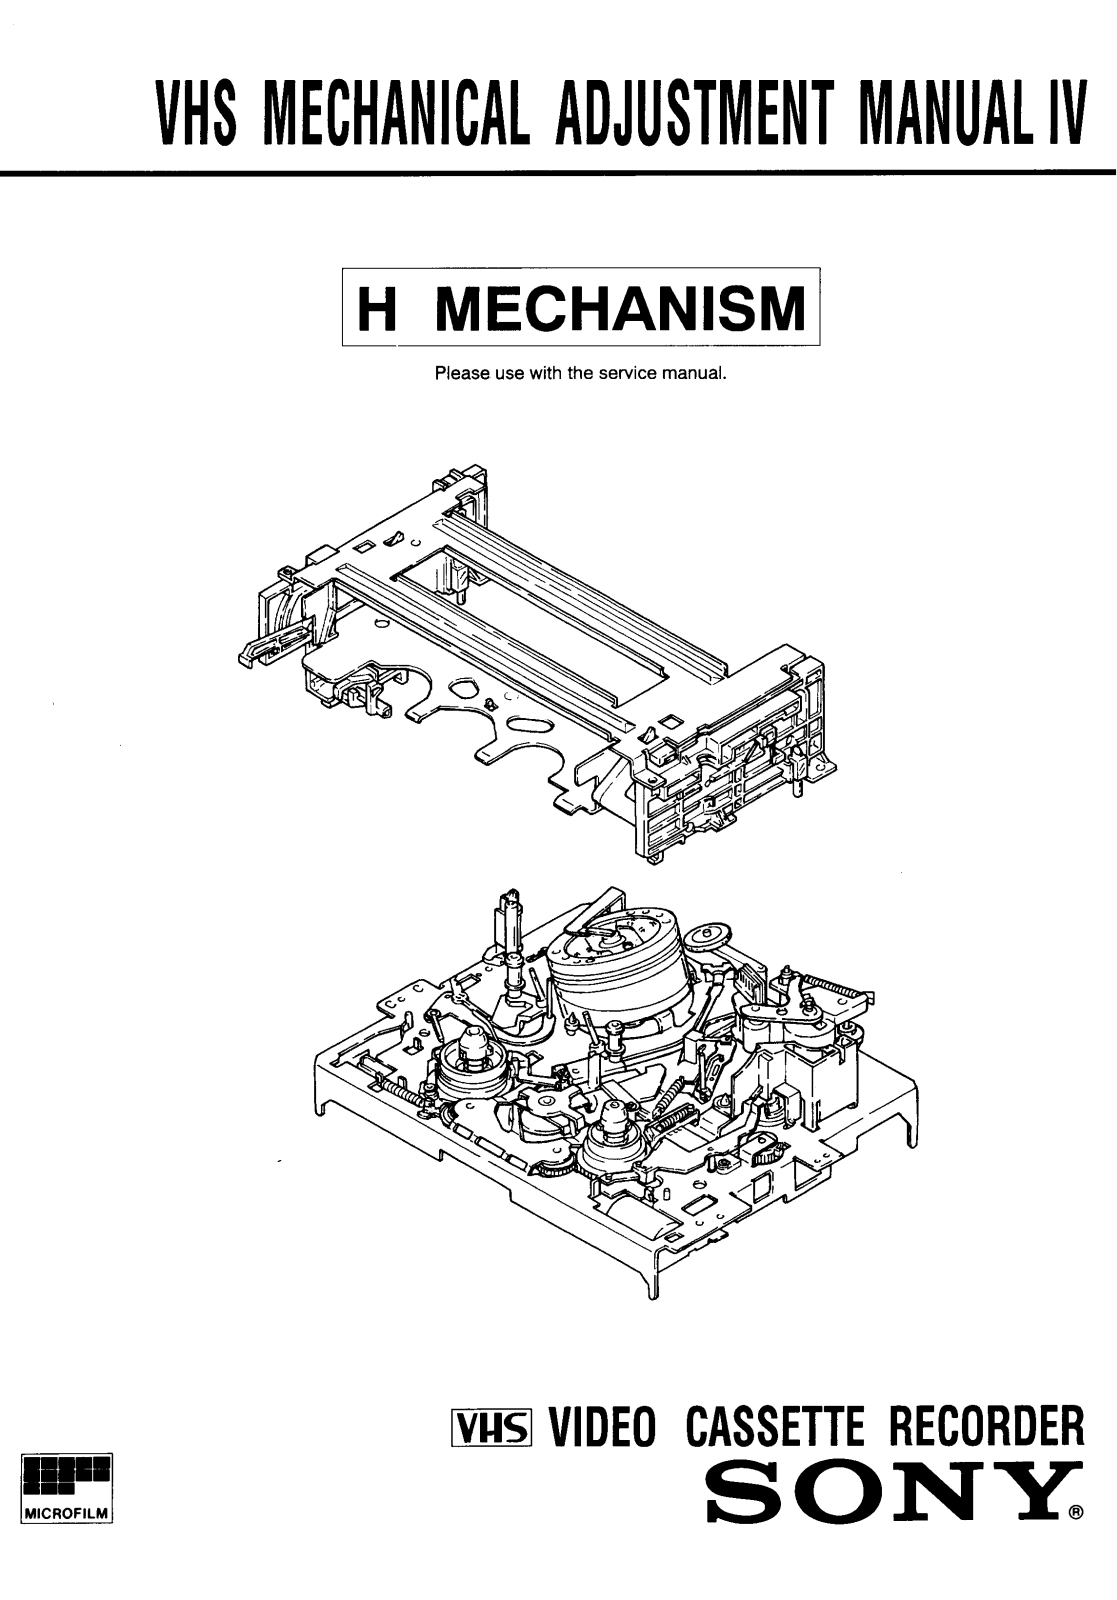 SONY H mechanism Service Manual